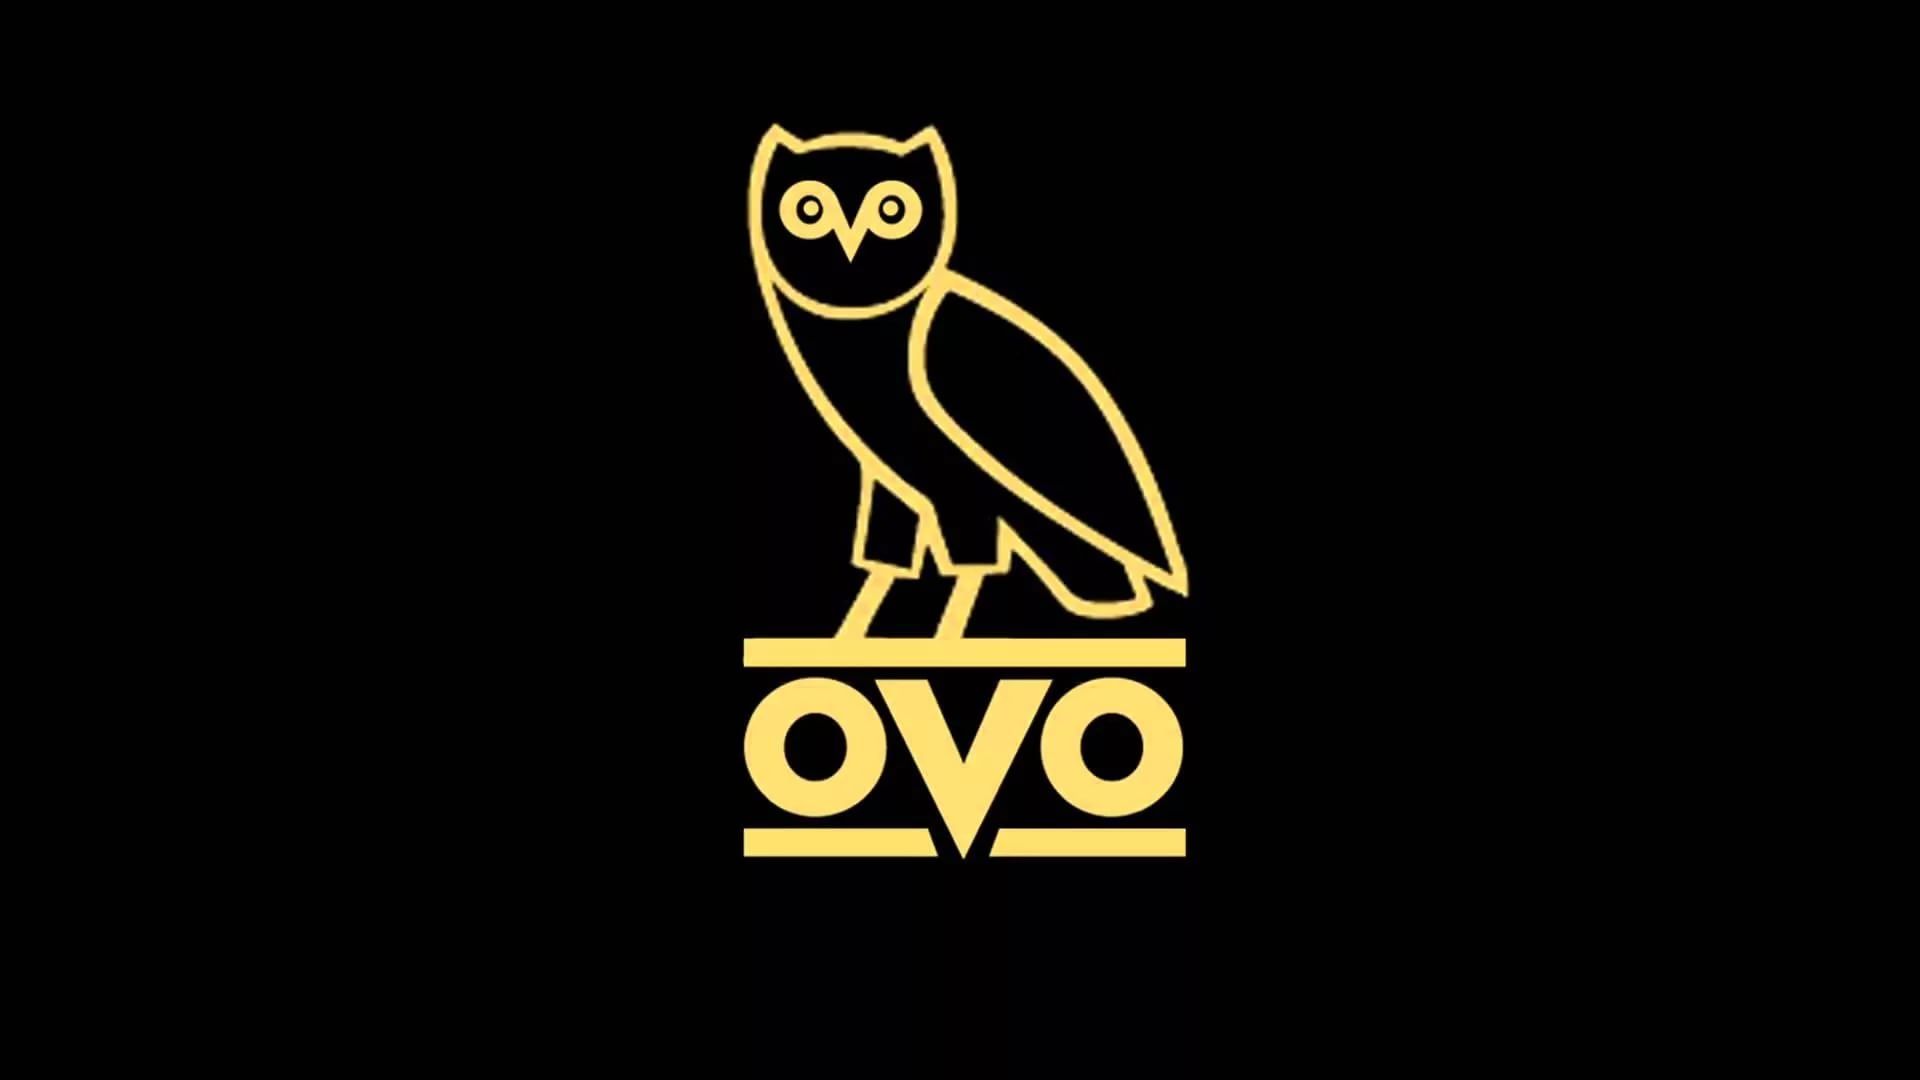 Drake Ovoxo Logo Wallpapers